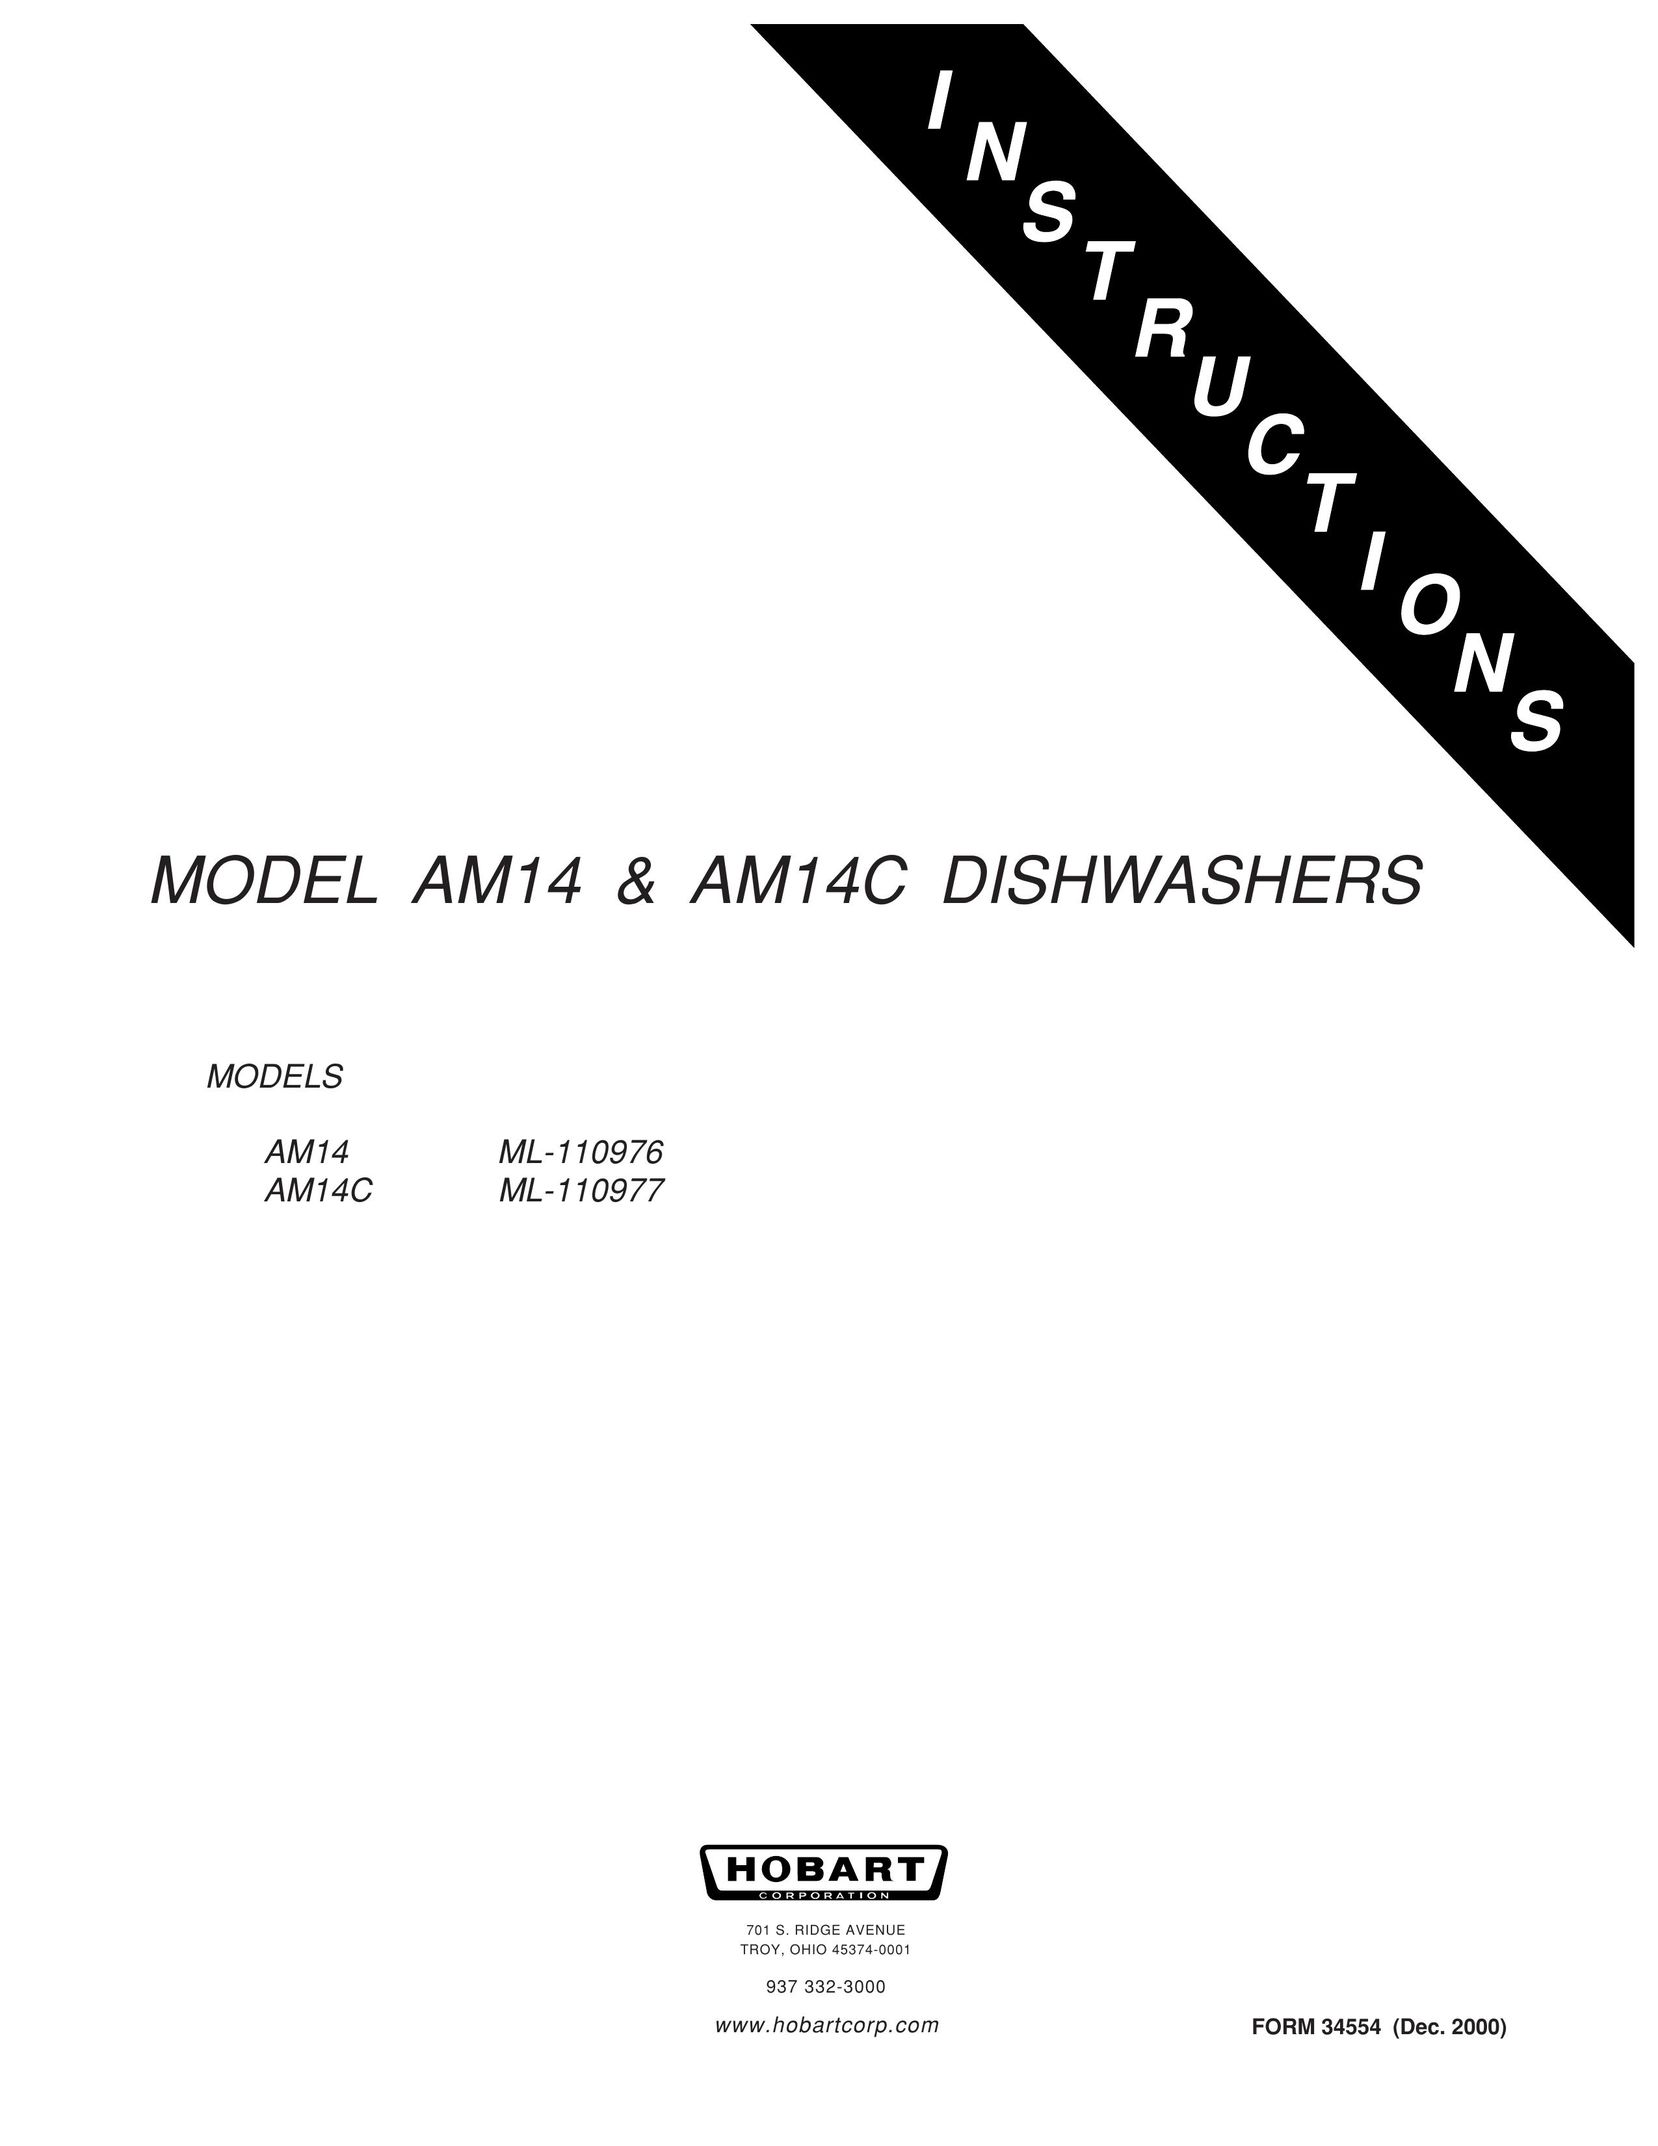 Hobart AM14 ML-110976 Dishwasher User Manual